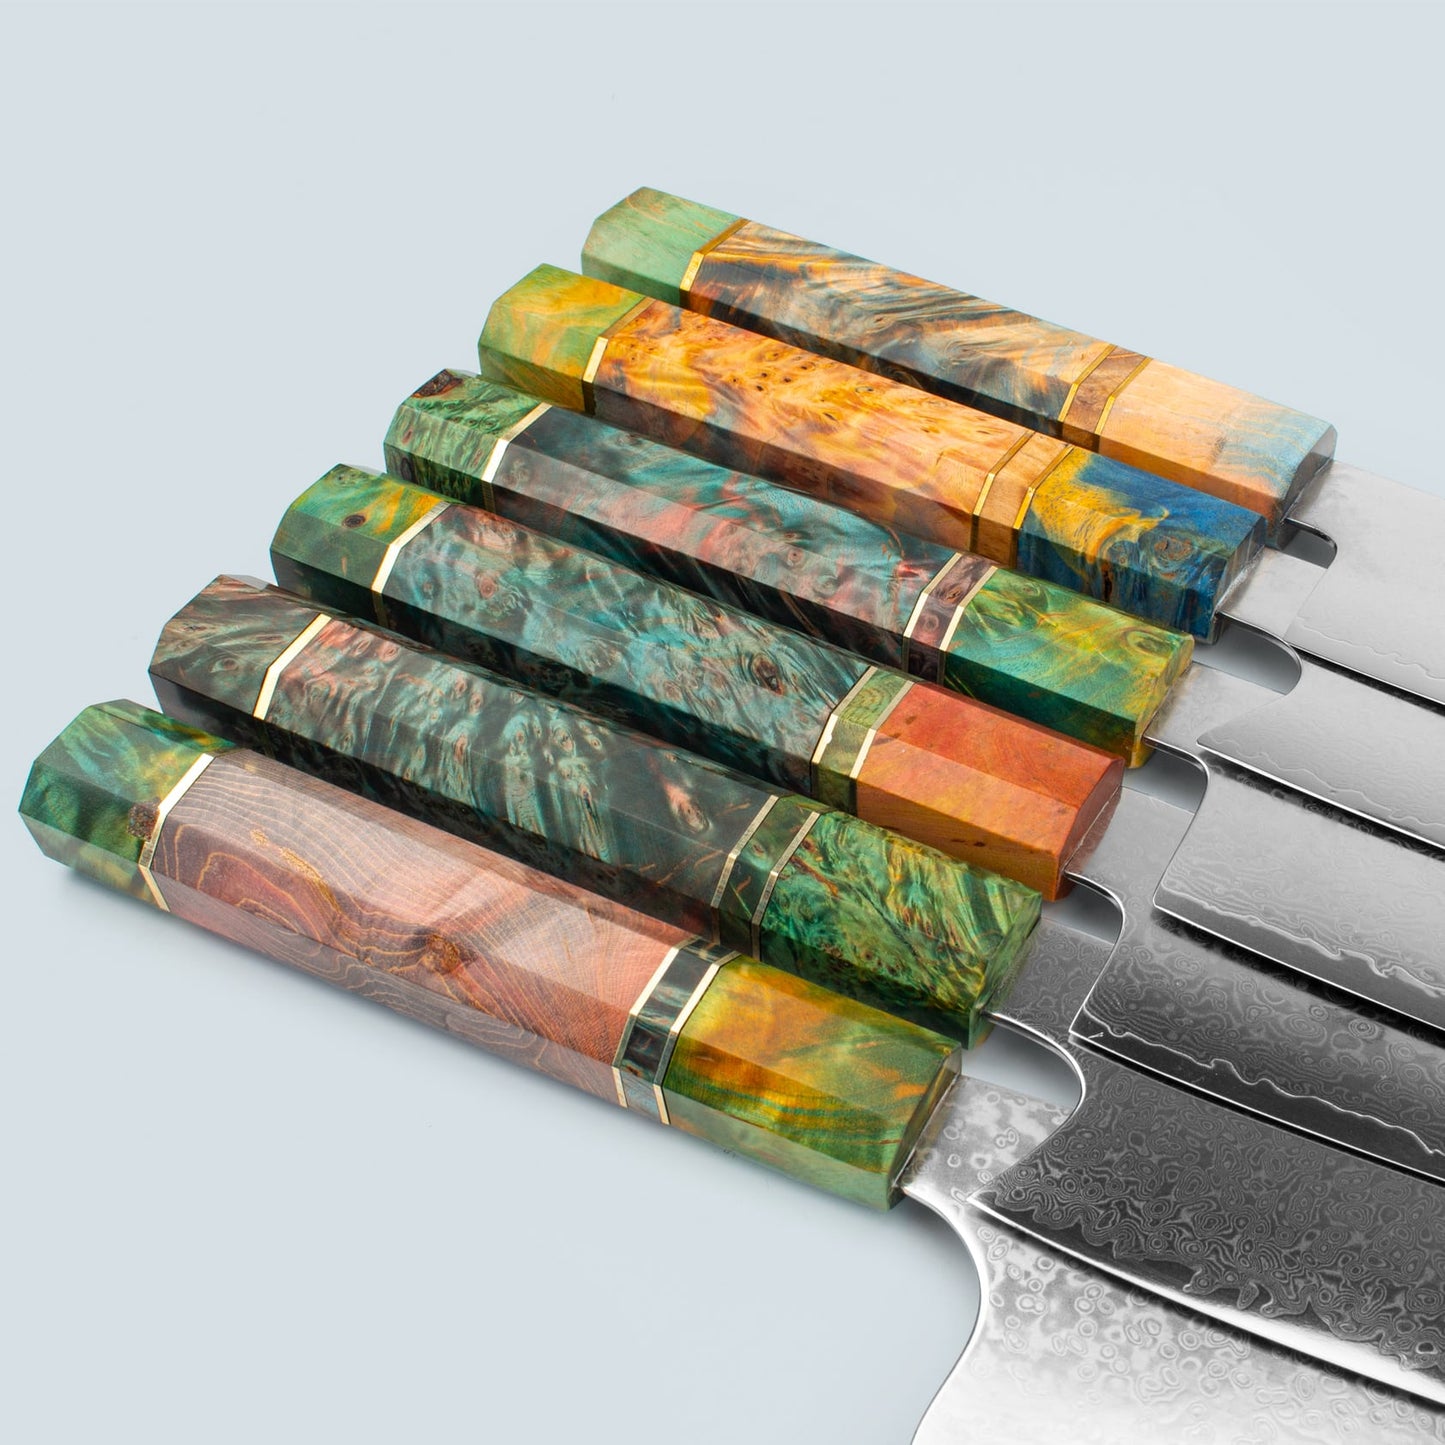 Ichika (いちか) Damascus Steel Knife with coloured Octagonal Handle